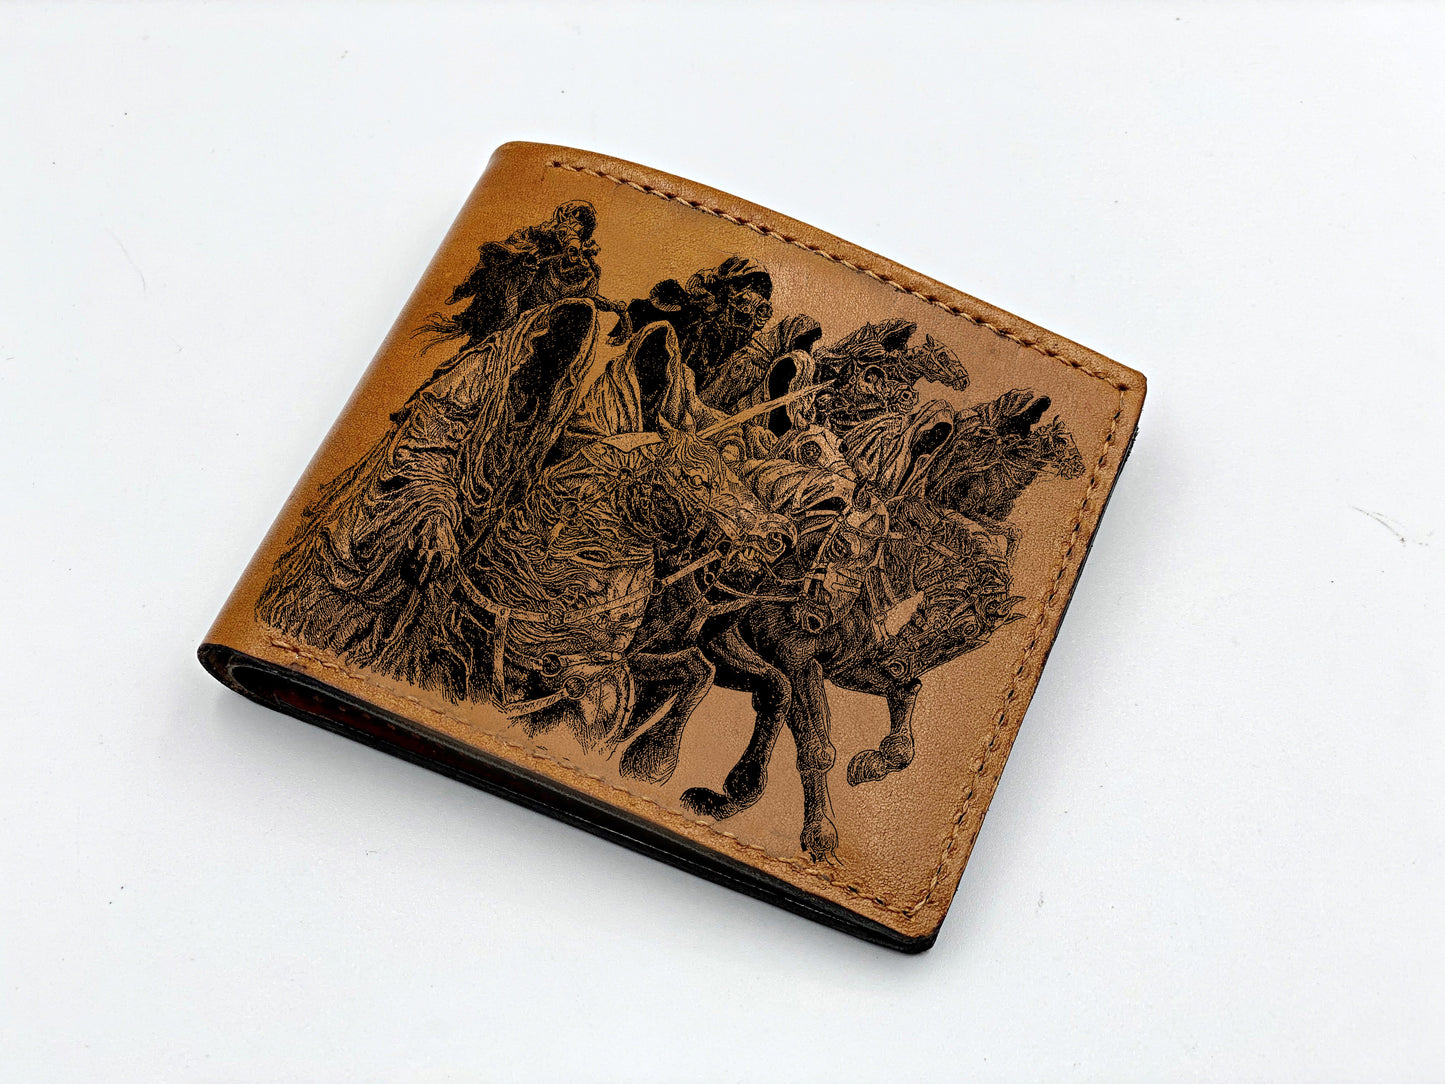 Mayan Corner - Customized leather men wallet, the hobbit door drawing leather art, LOTR fan annivesary gift ideas, custom leather wallet for men